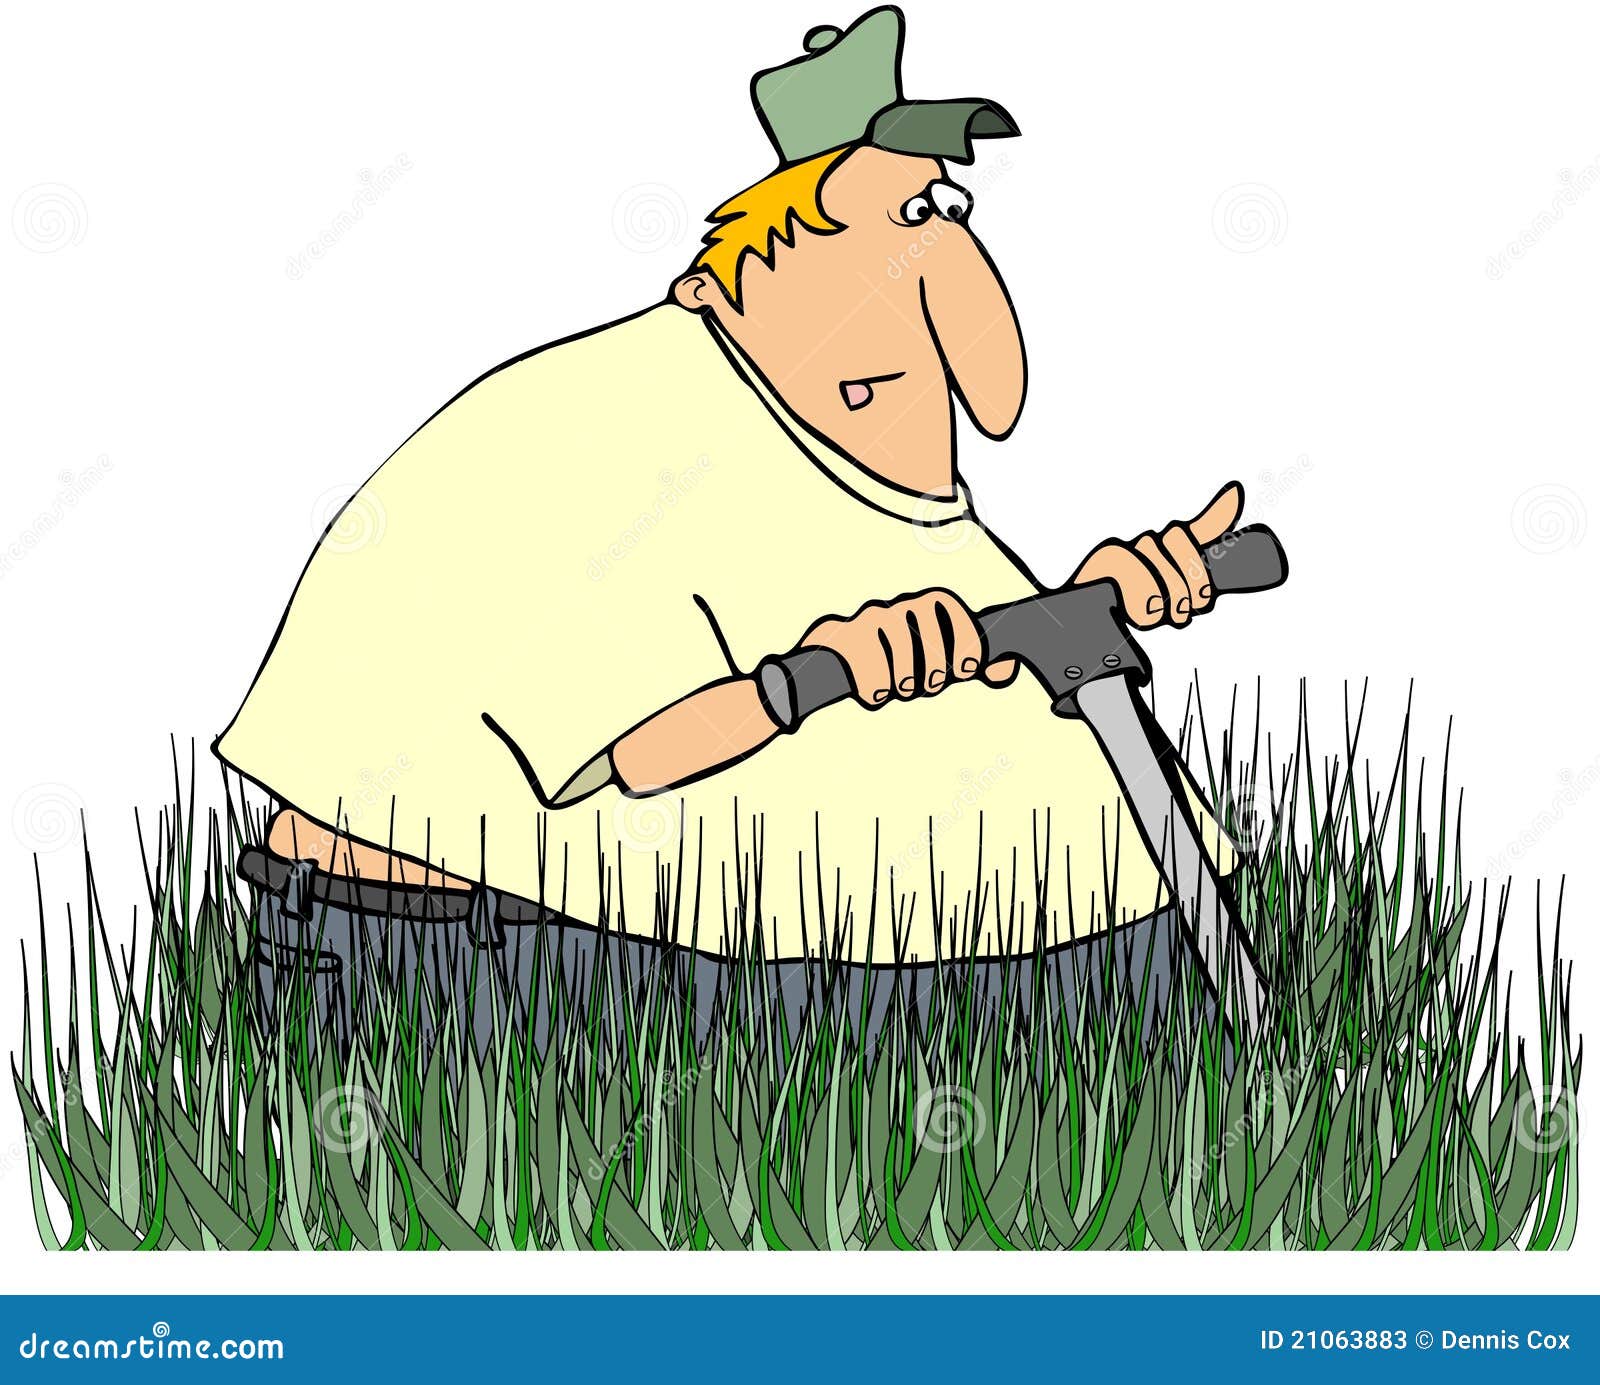 clipart of man cutting grass - photo #49